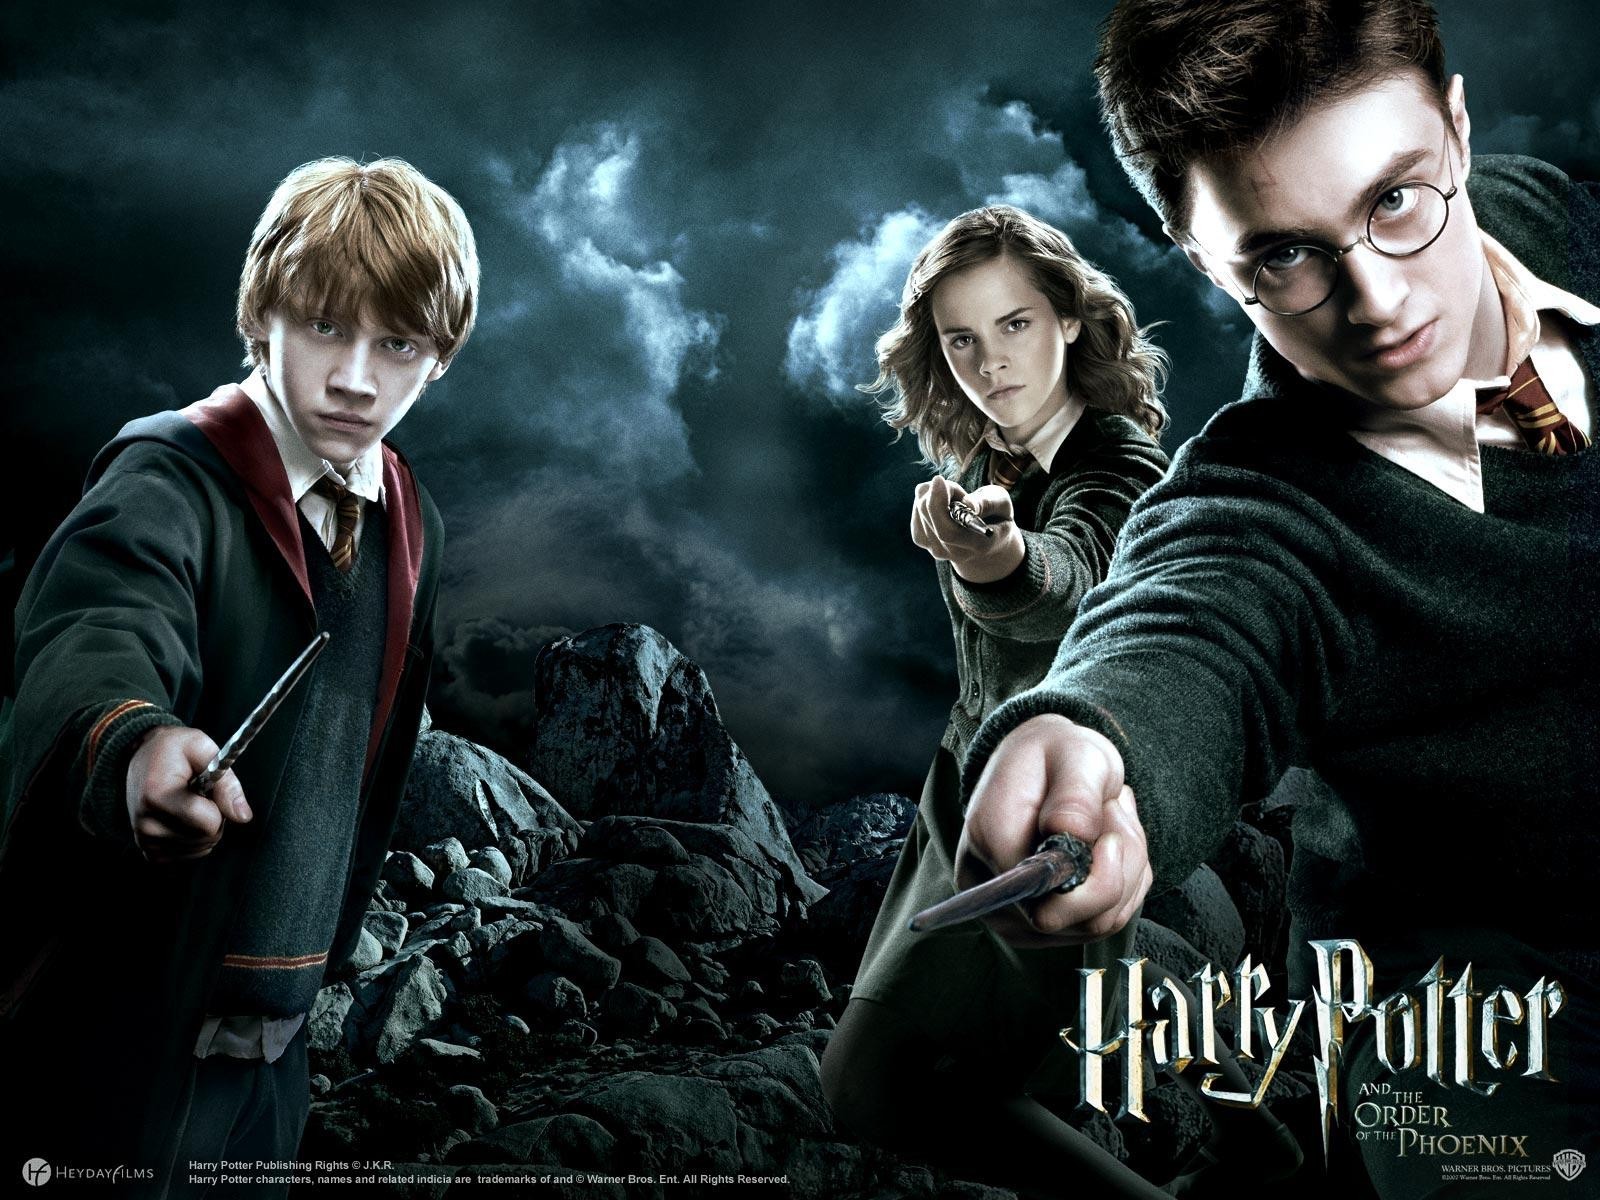 https://blogger.googleusercontent.com/img/b/R29vZ2xl/AVvXsEgh_gqwWuD0-U9mmZjfF02x6j-mJeIjMDySEKA96ijUTjlWAqwJA3L1RnHSM5mUu5biaU4UanM0hpSzqMQySYj8EB53tg5exkMh8SHYaV6pwEwCWrUJfM03nOpnlNCgJf_EC_Gfy2OLoo_A/s1600/Harry+Potter+and+the+Deathly+Hallows+part+2.jpg